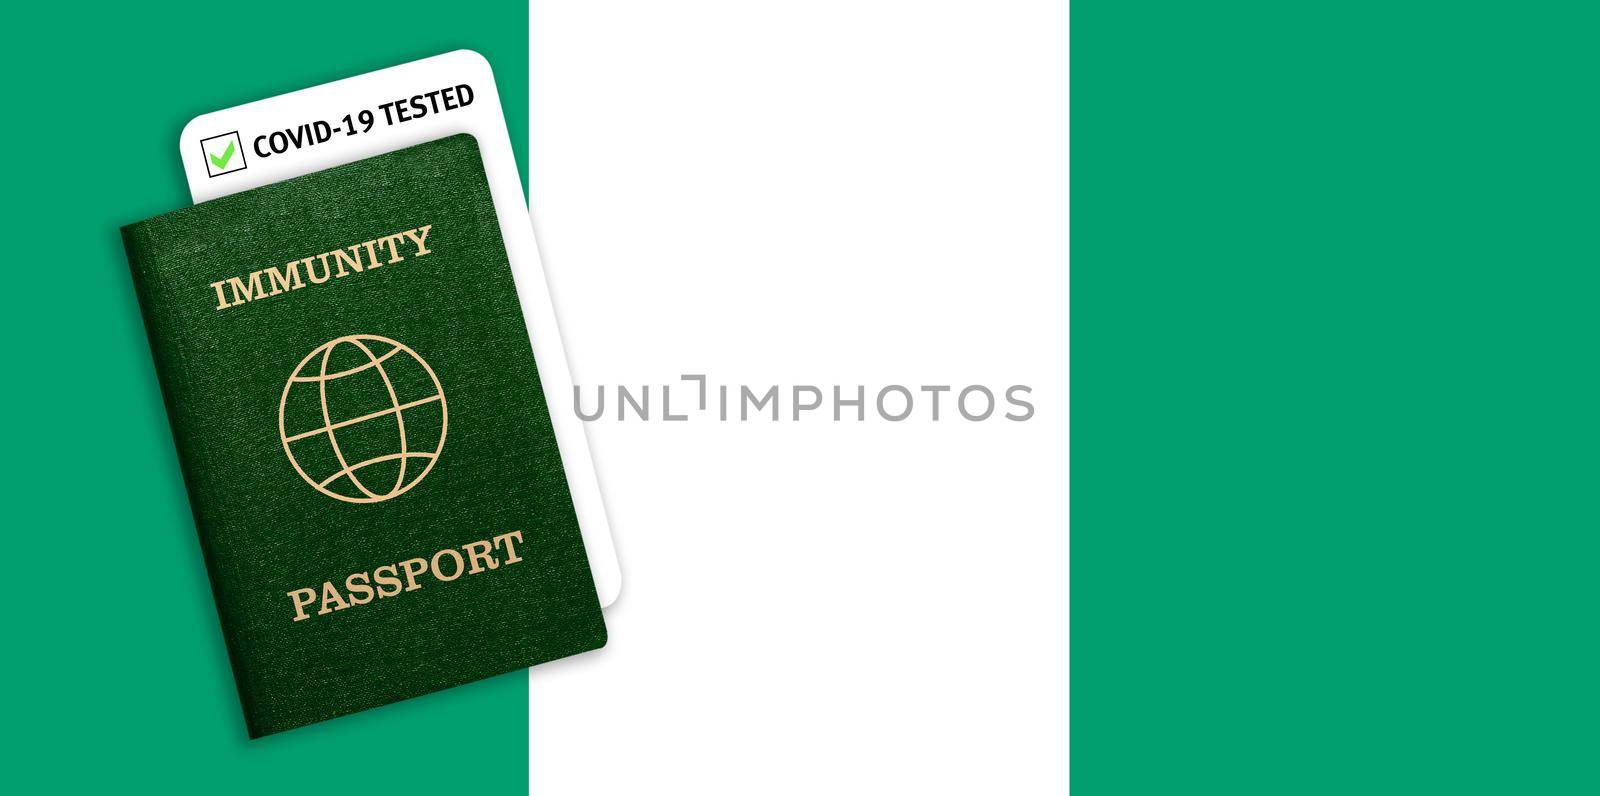 Immunity passport and test result for COVID-19 on flag of Nigeria by galinasharapova